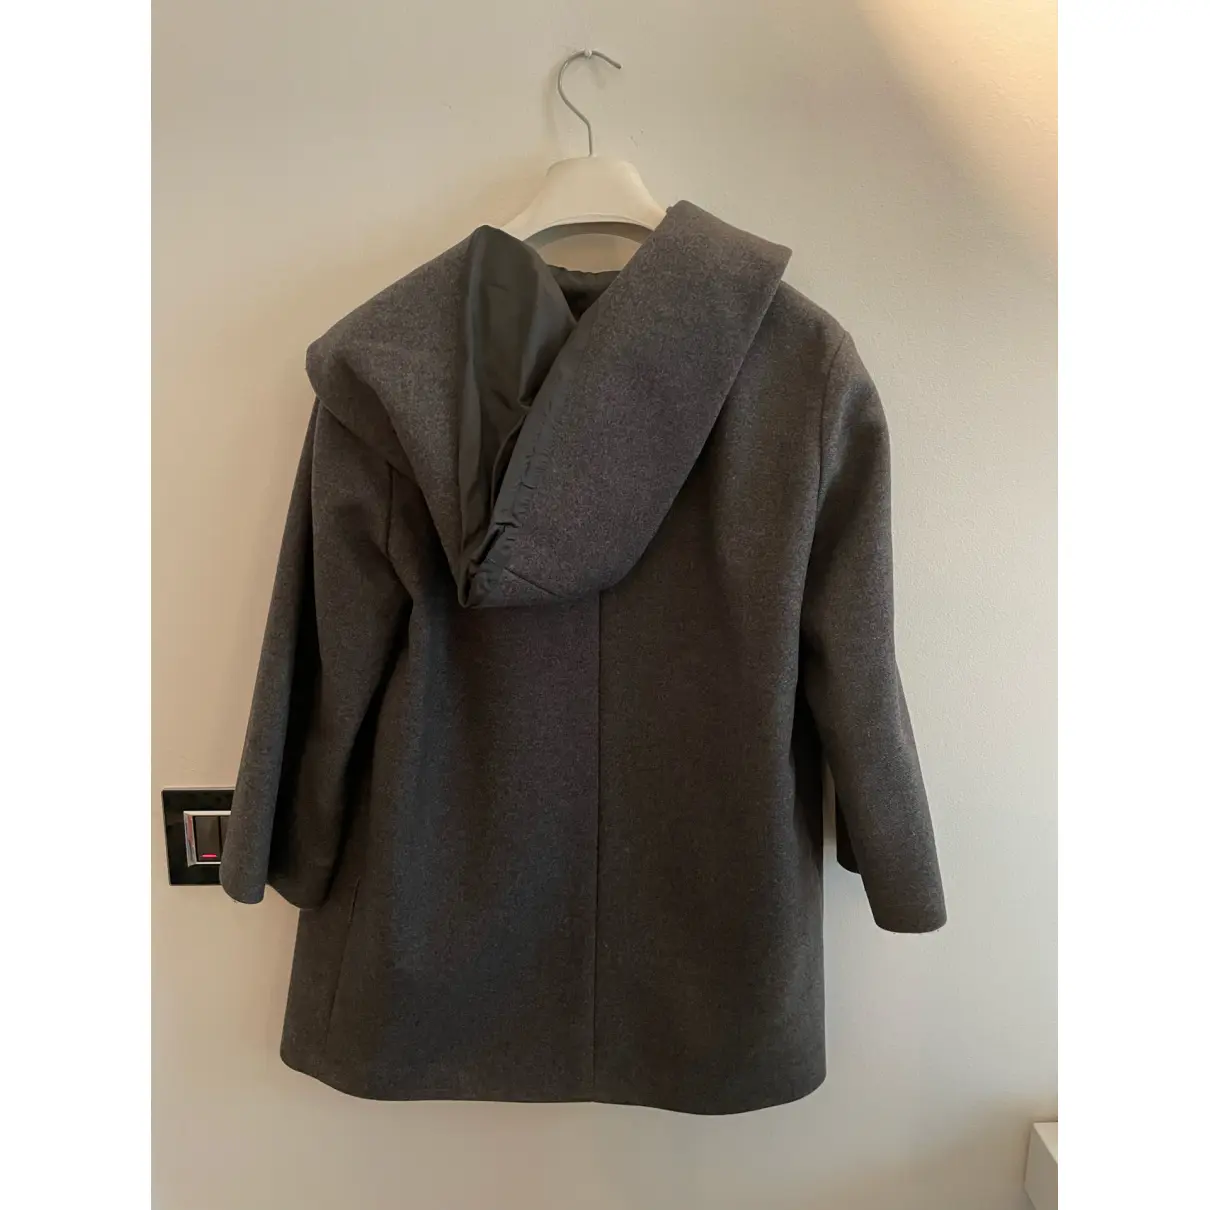 Buy Mauro Grifoni Wool coat online